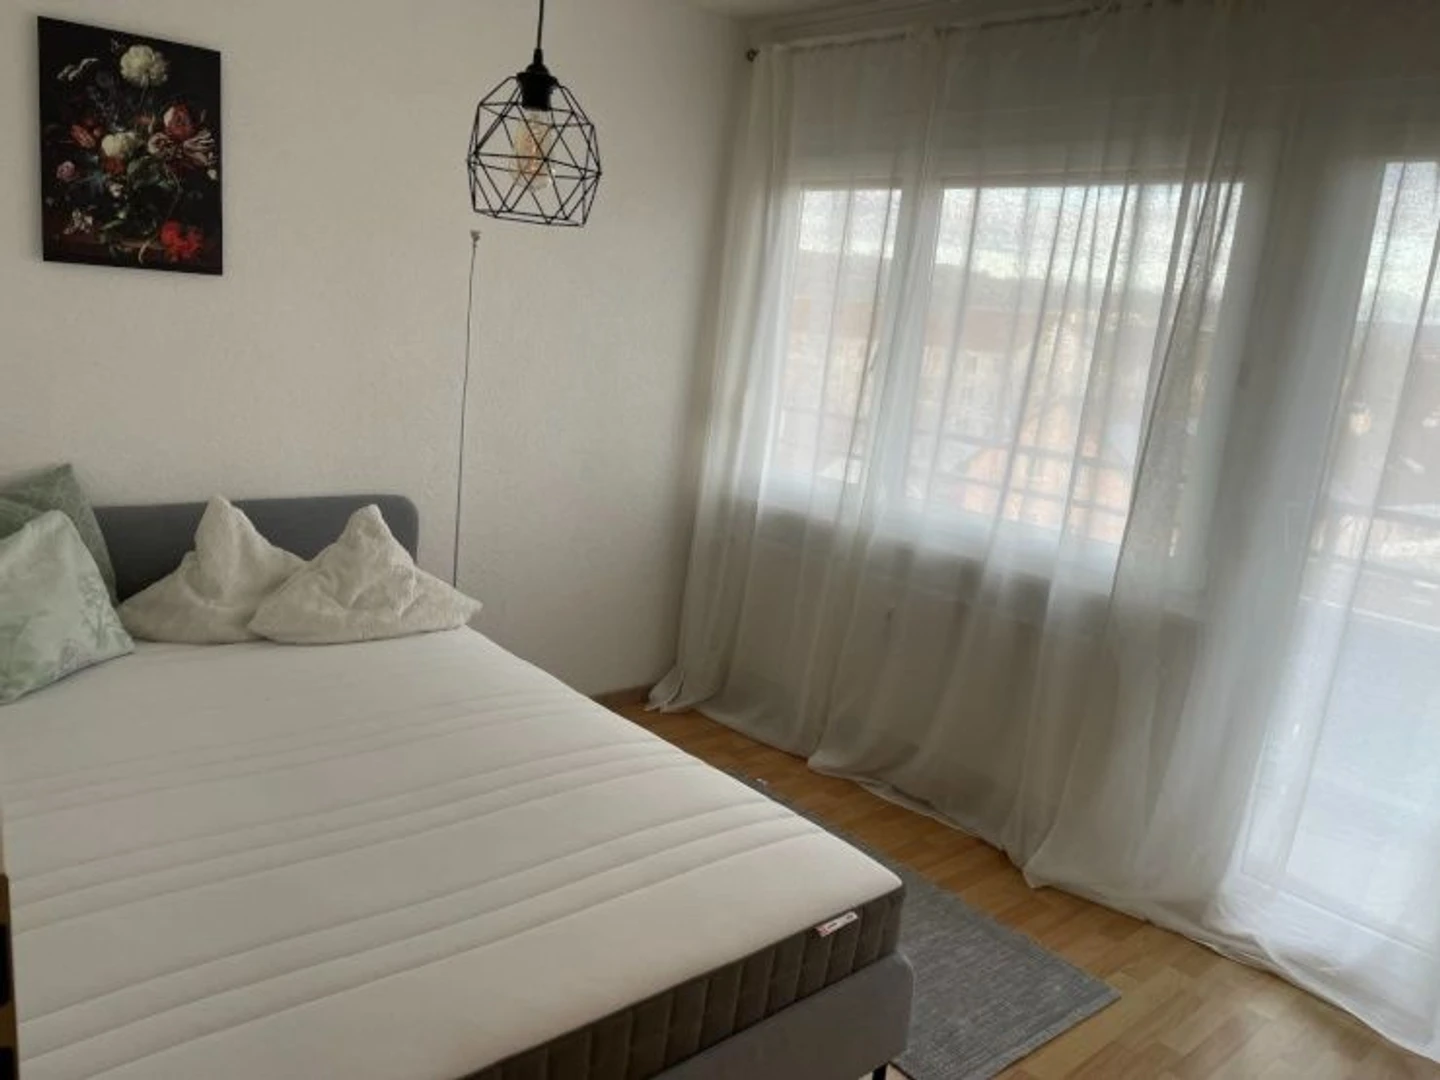 Habitación en alquiler con cama doble Basel